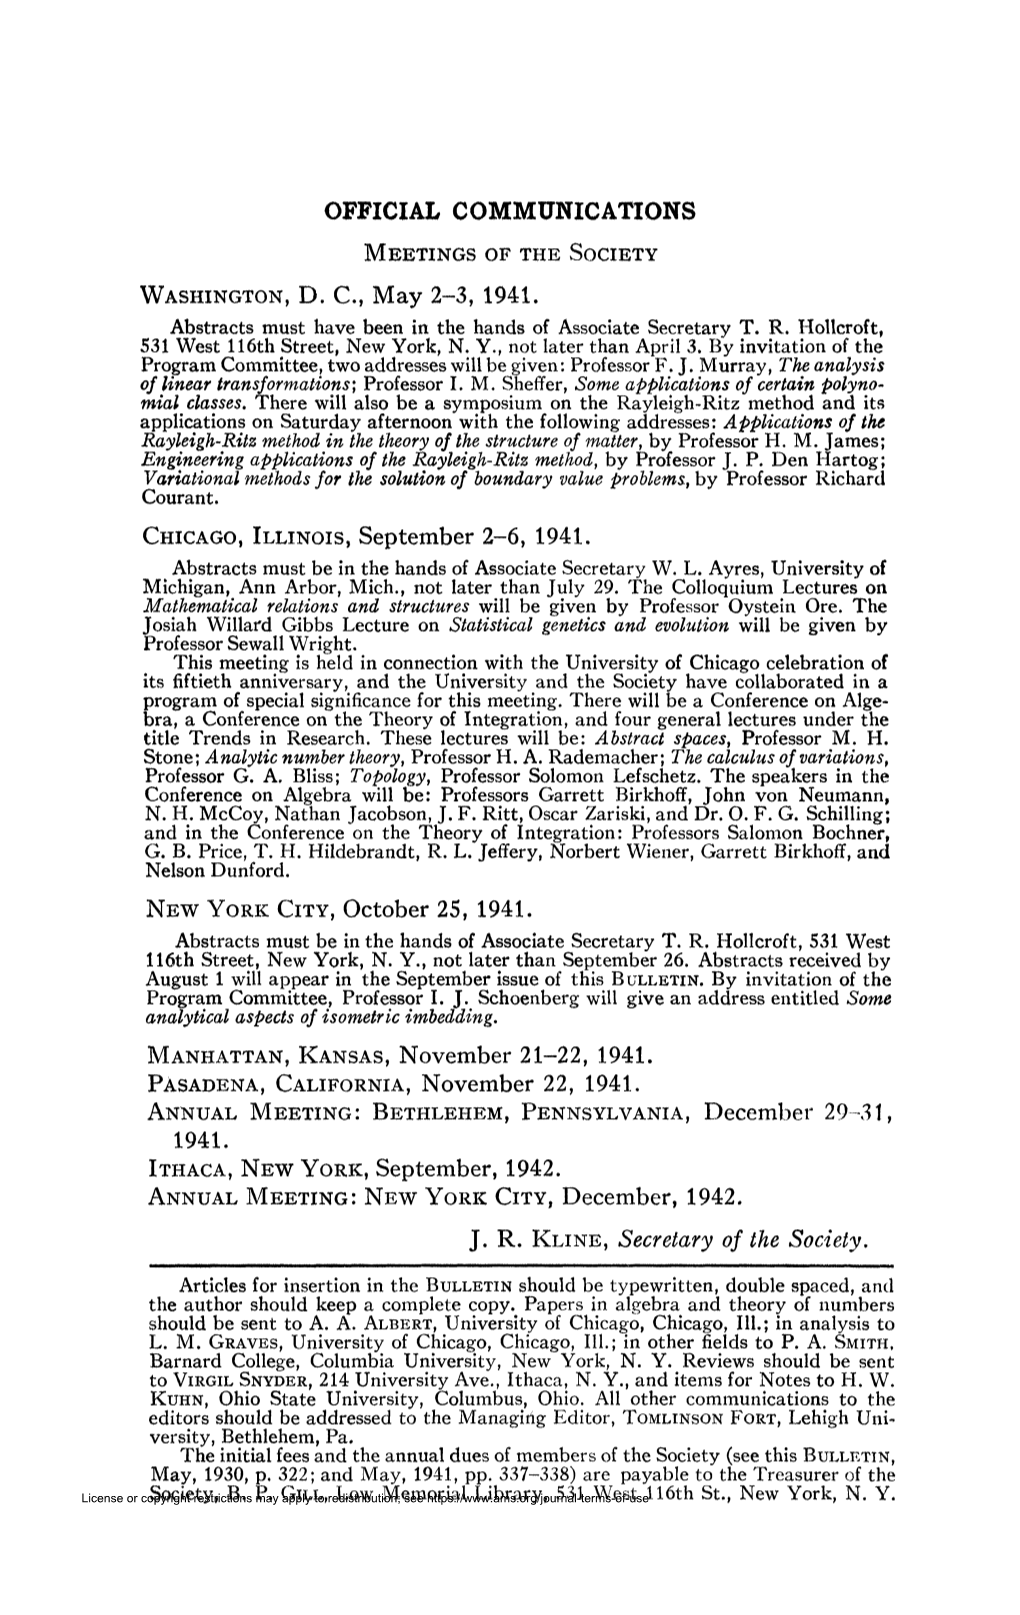 OFFICIAL COMMUNICATIONS 1941. J. R. KLINE, Secretary of the Society